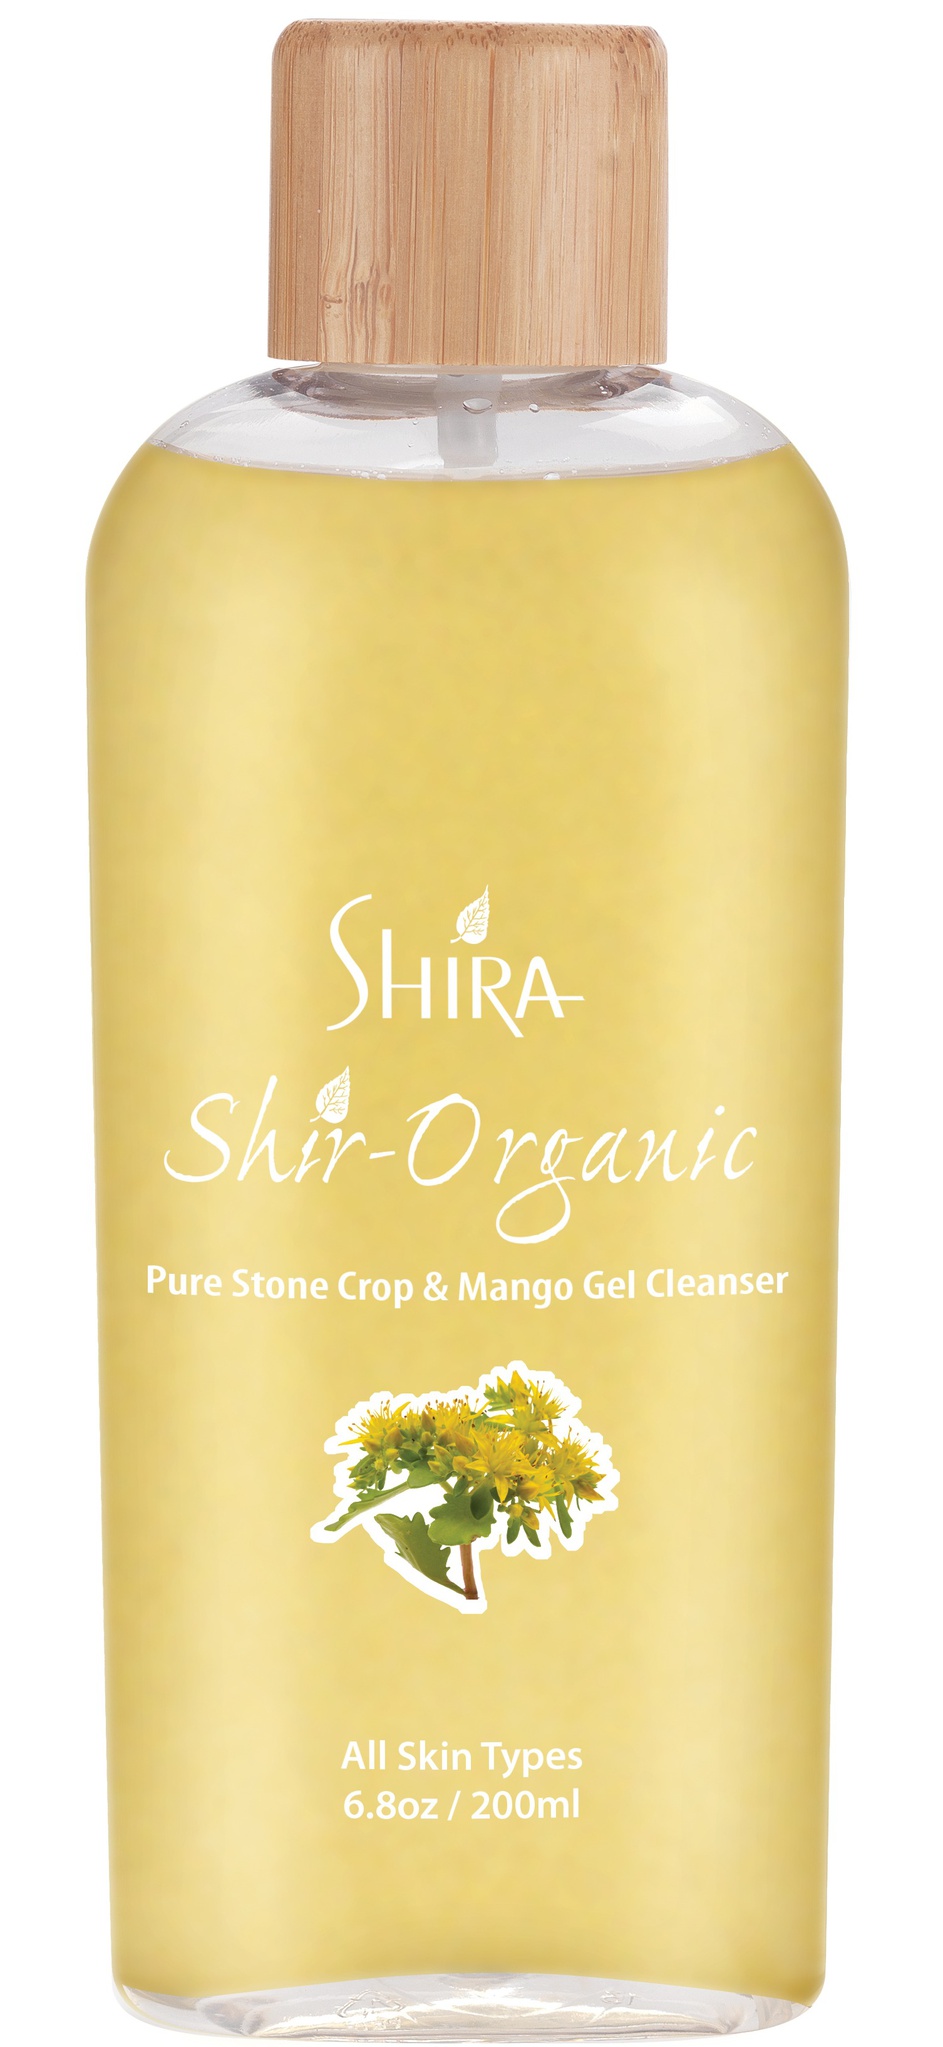 Shira Organic Shir-Organic Pure Stone Crop & Mango Gel Cleanser